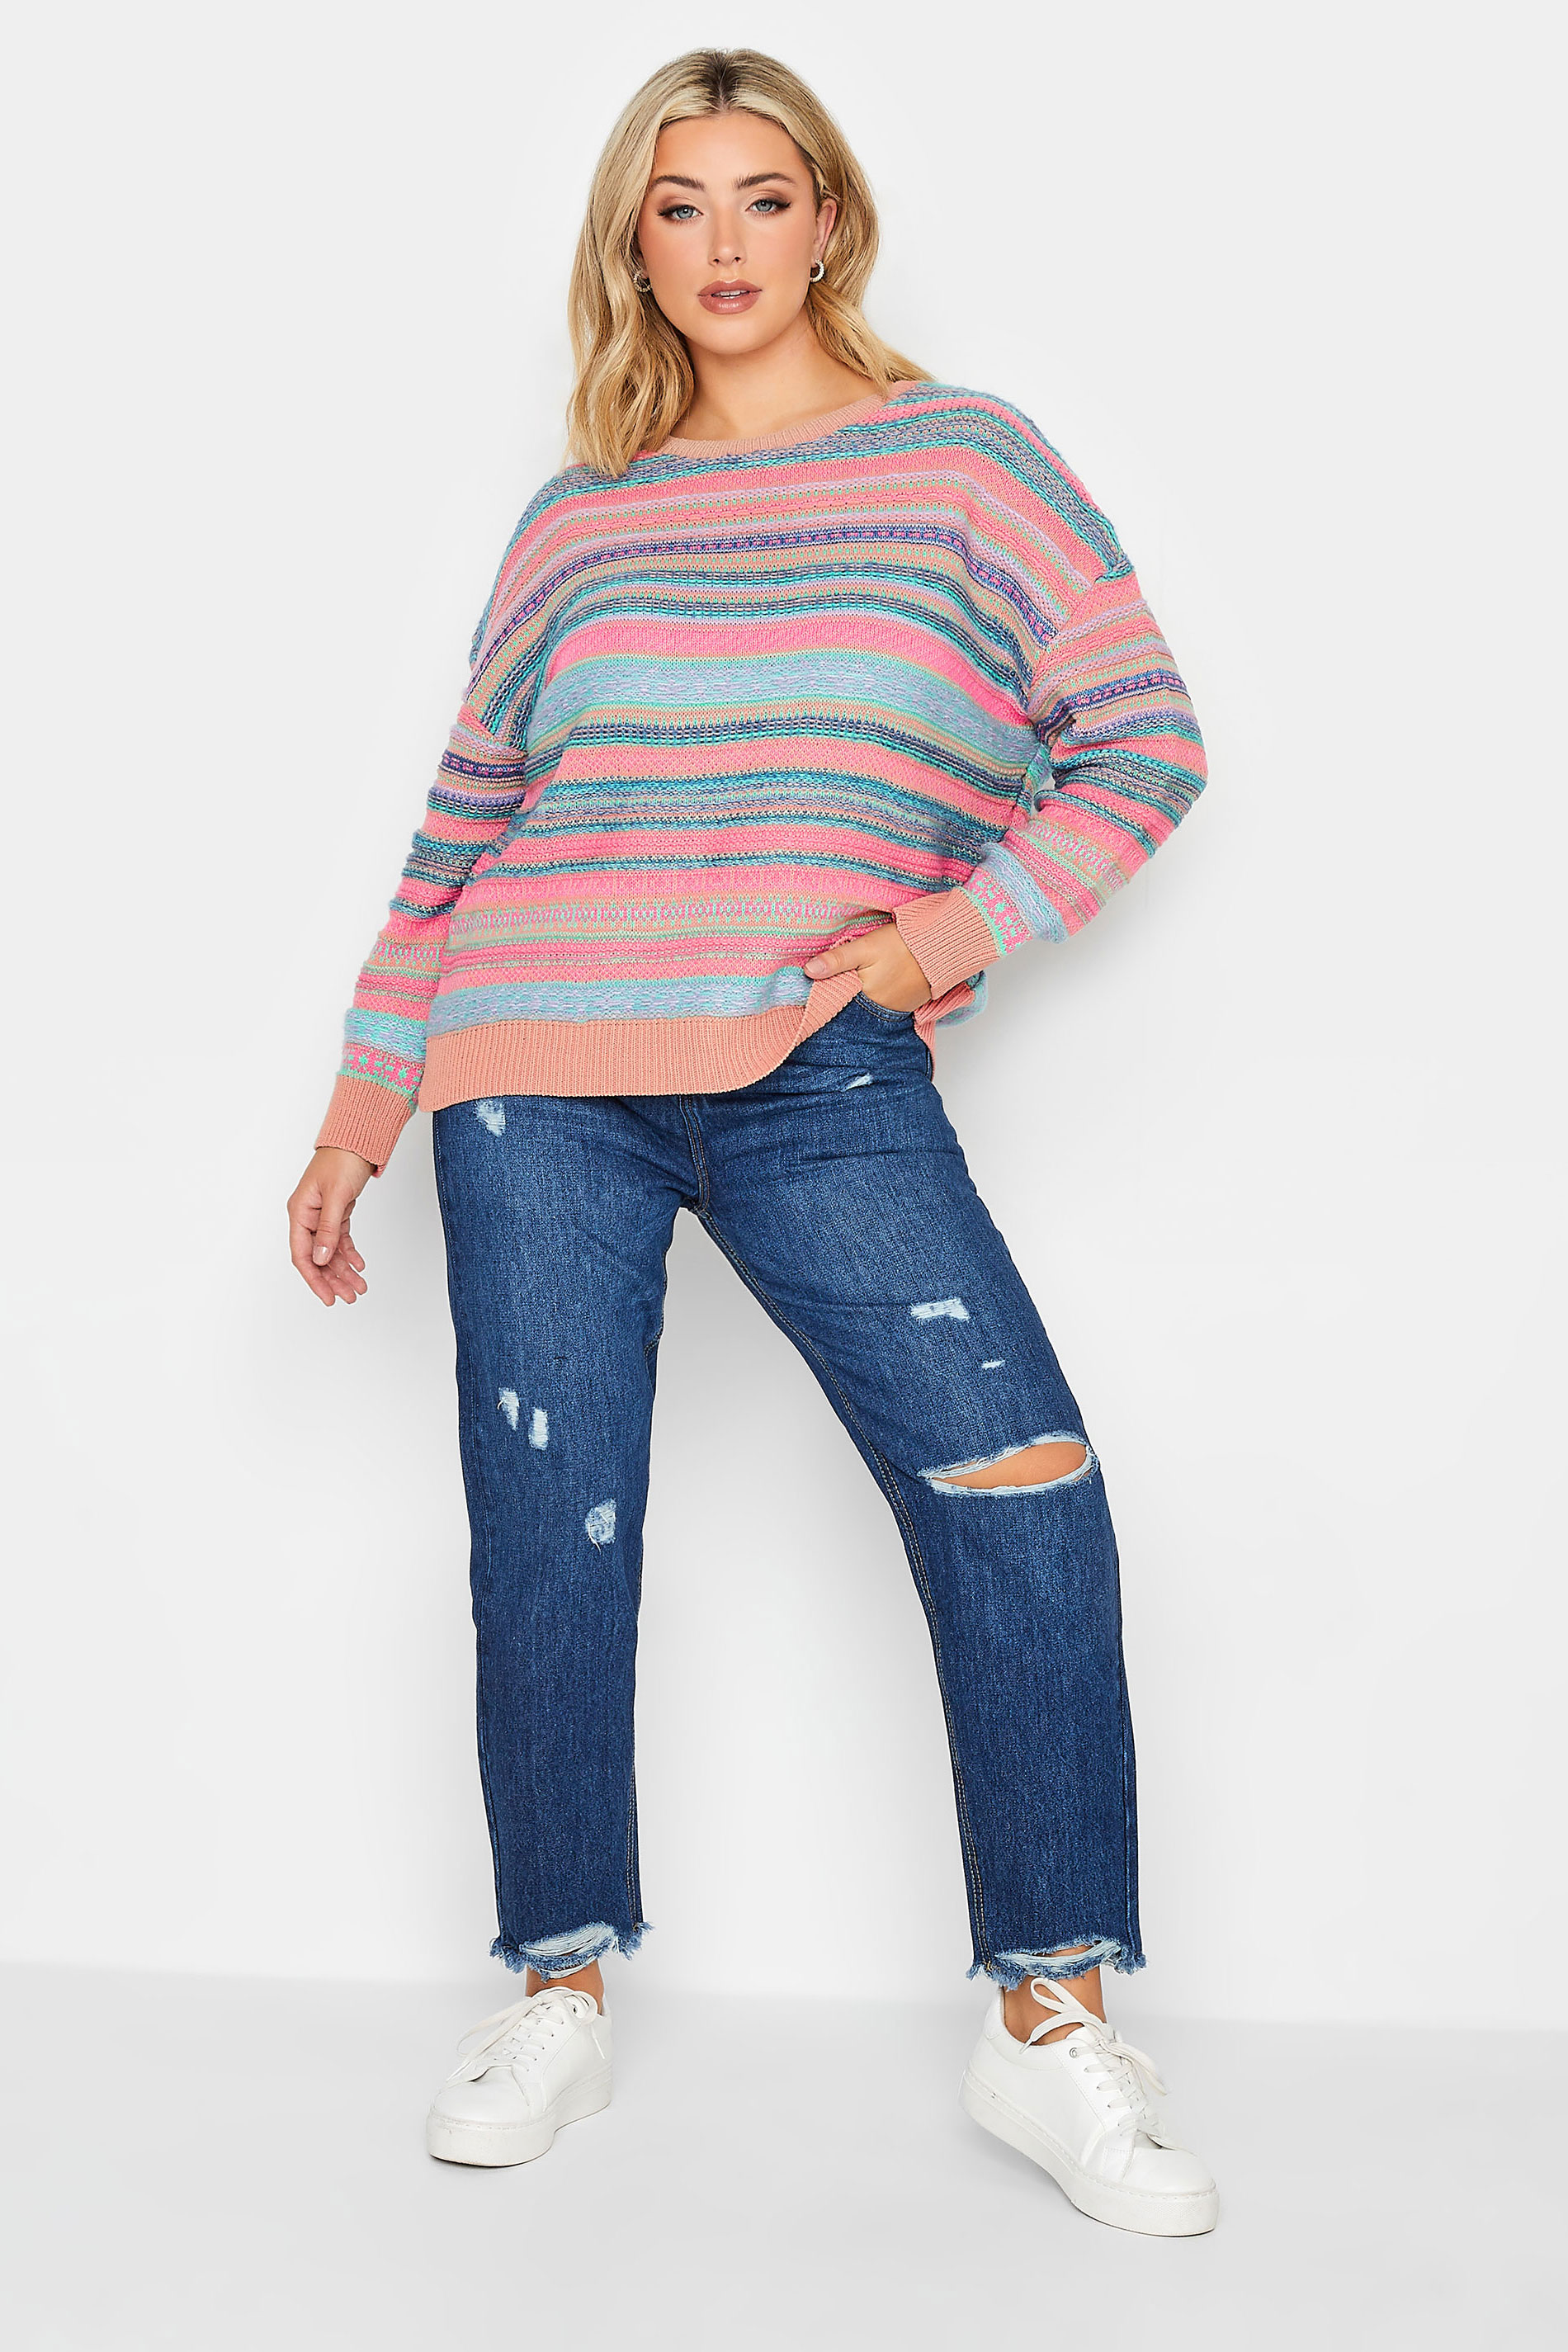 YOURS PETITE Plus Size Curve Pink & Blue Pastel Fairisle Long Sleeve Jumper | Yours Clothing  2